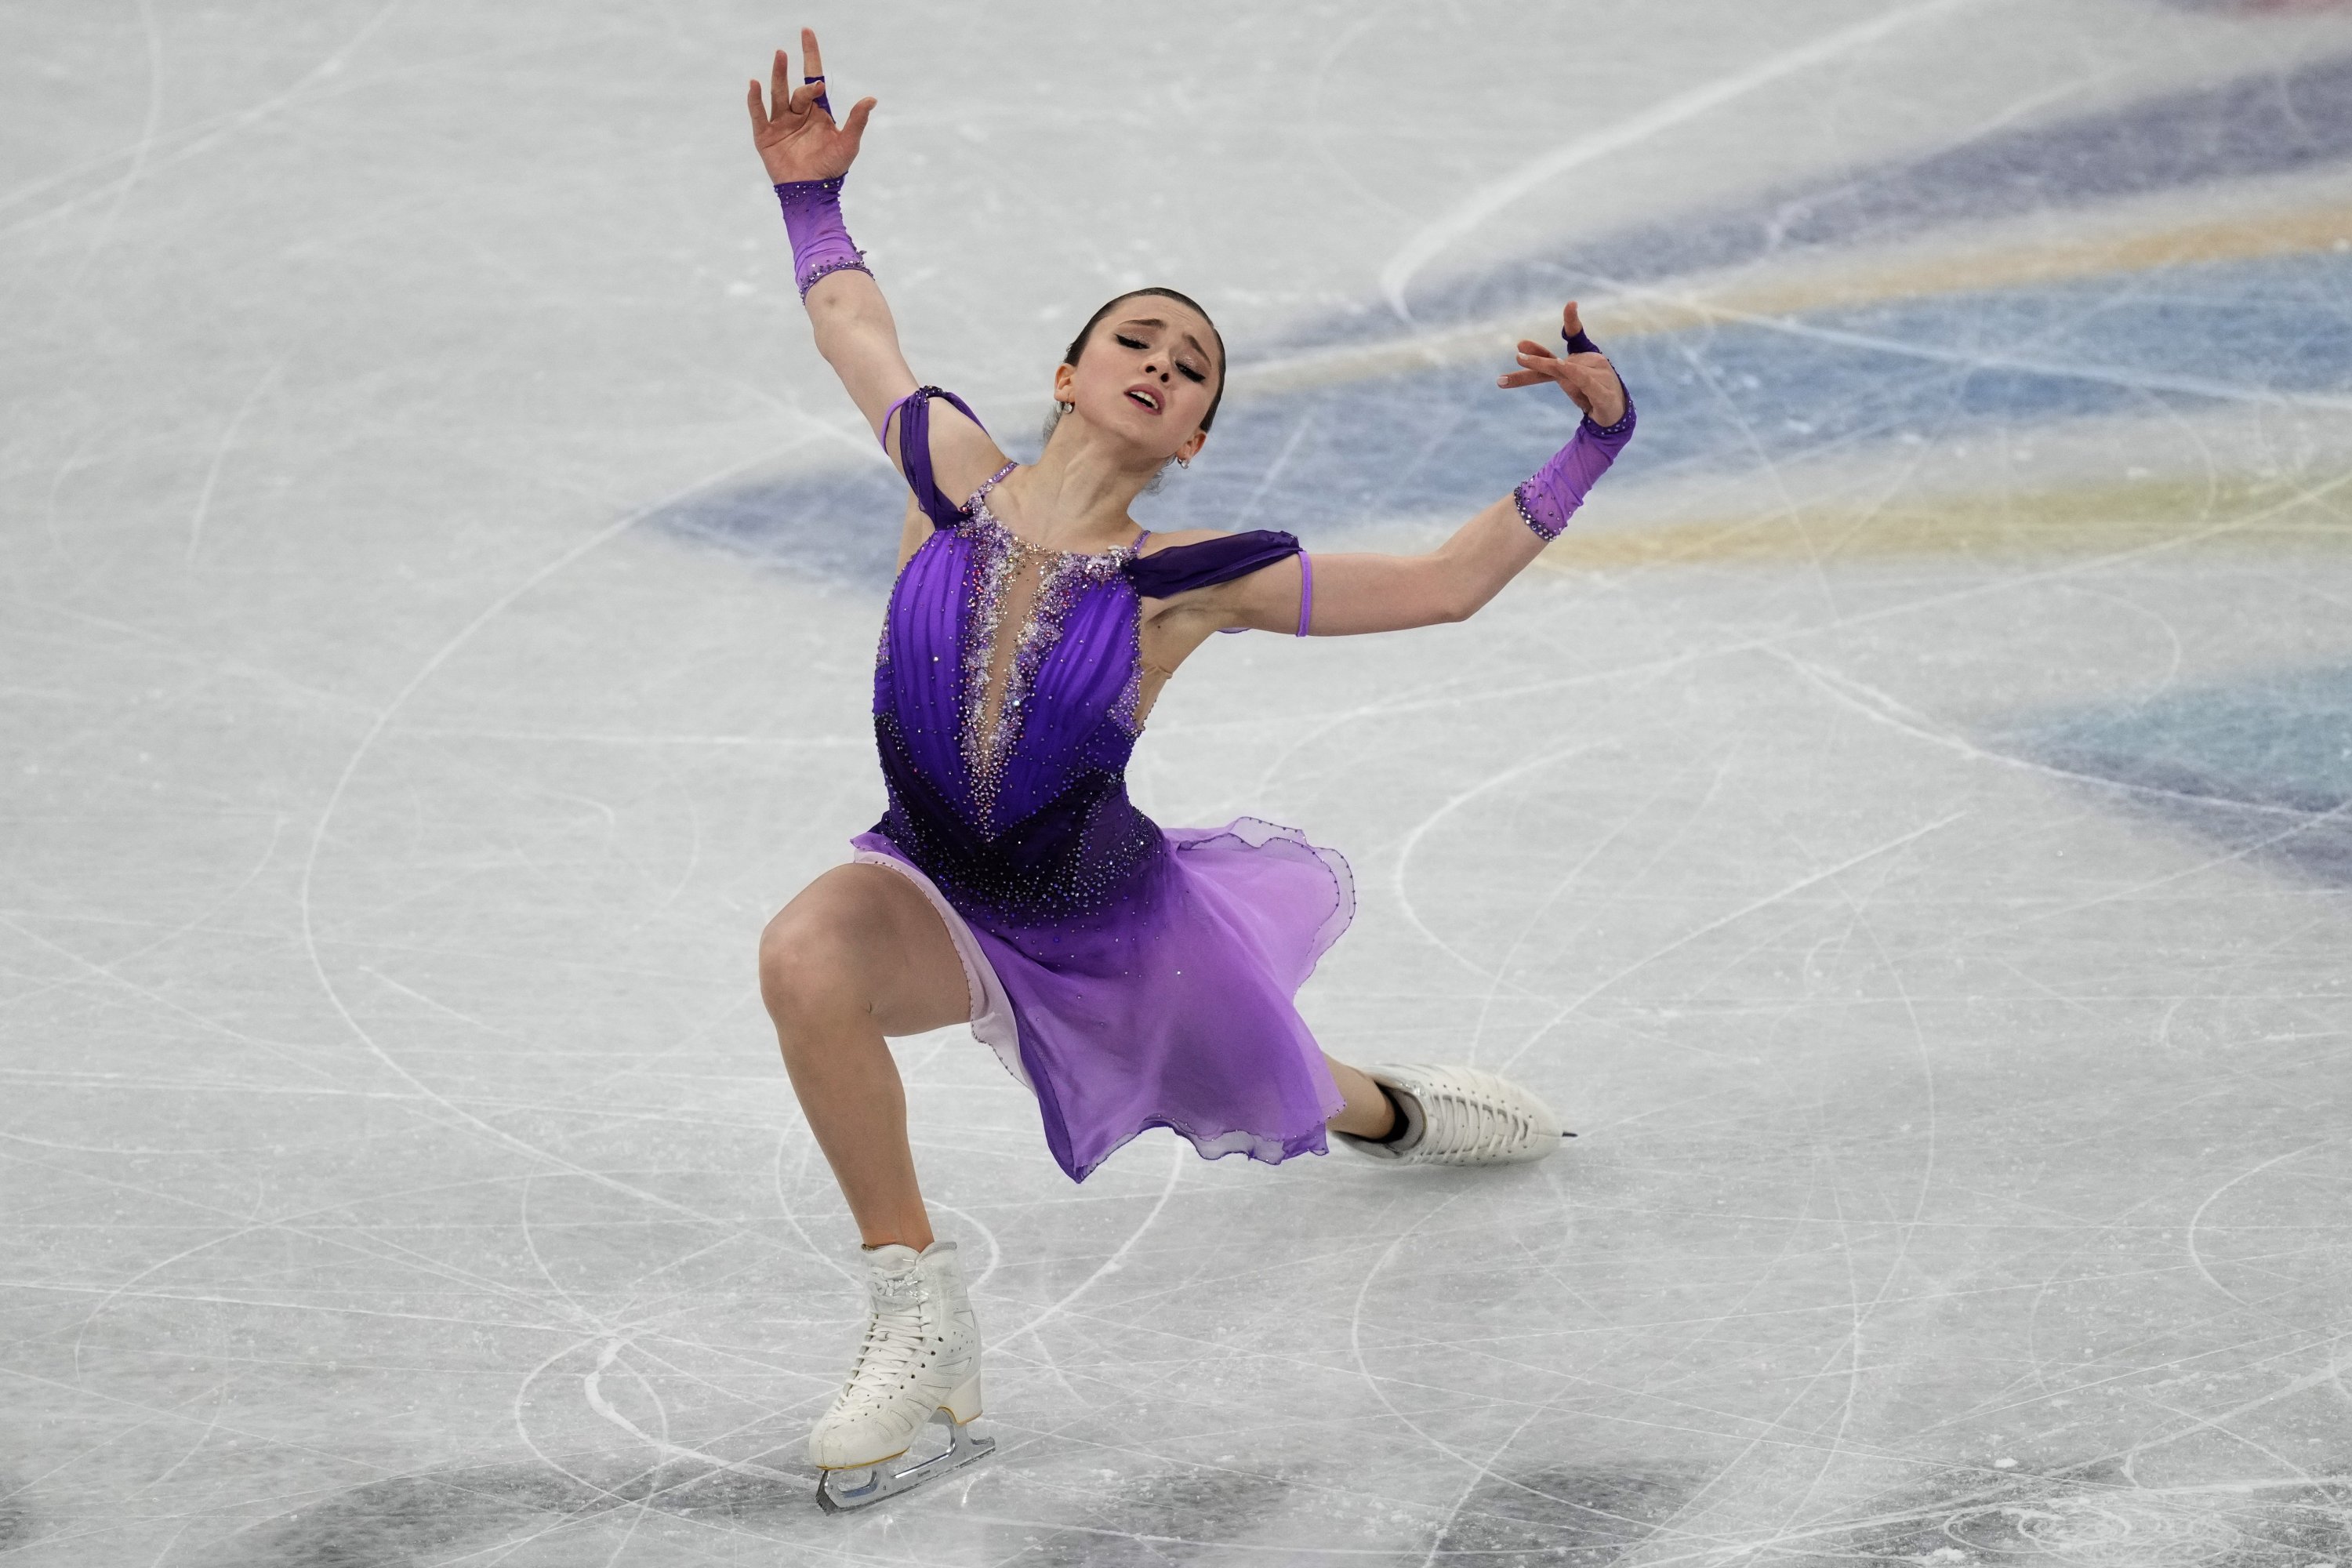 Russia's Kamila Valieva competes in the 2022 Winter Olympics women's short program figure skating event, Feb. 15, 2022, Beijing, China. (AP Photo)